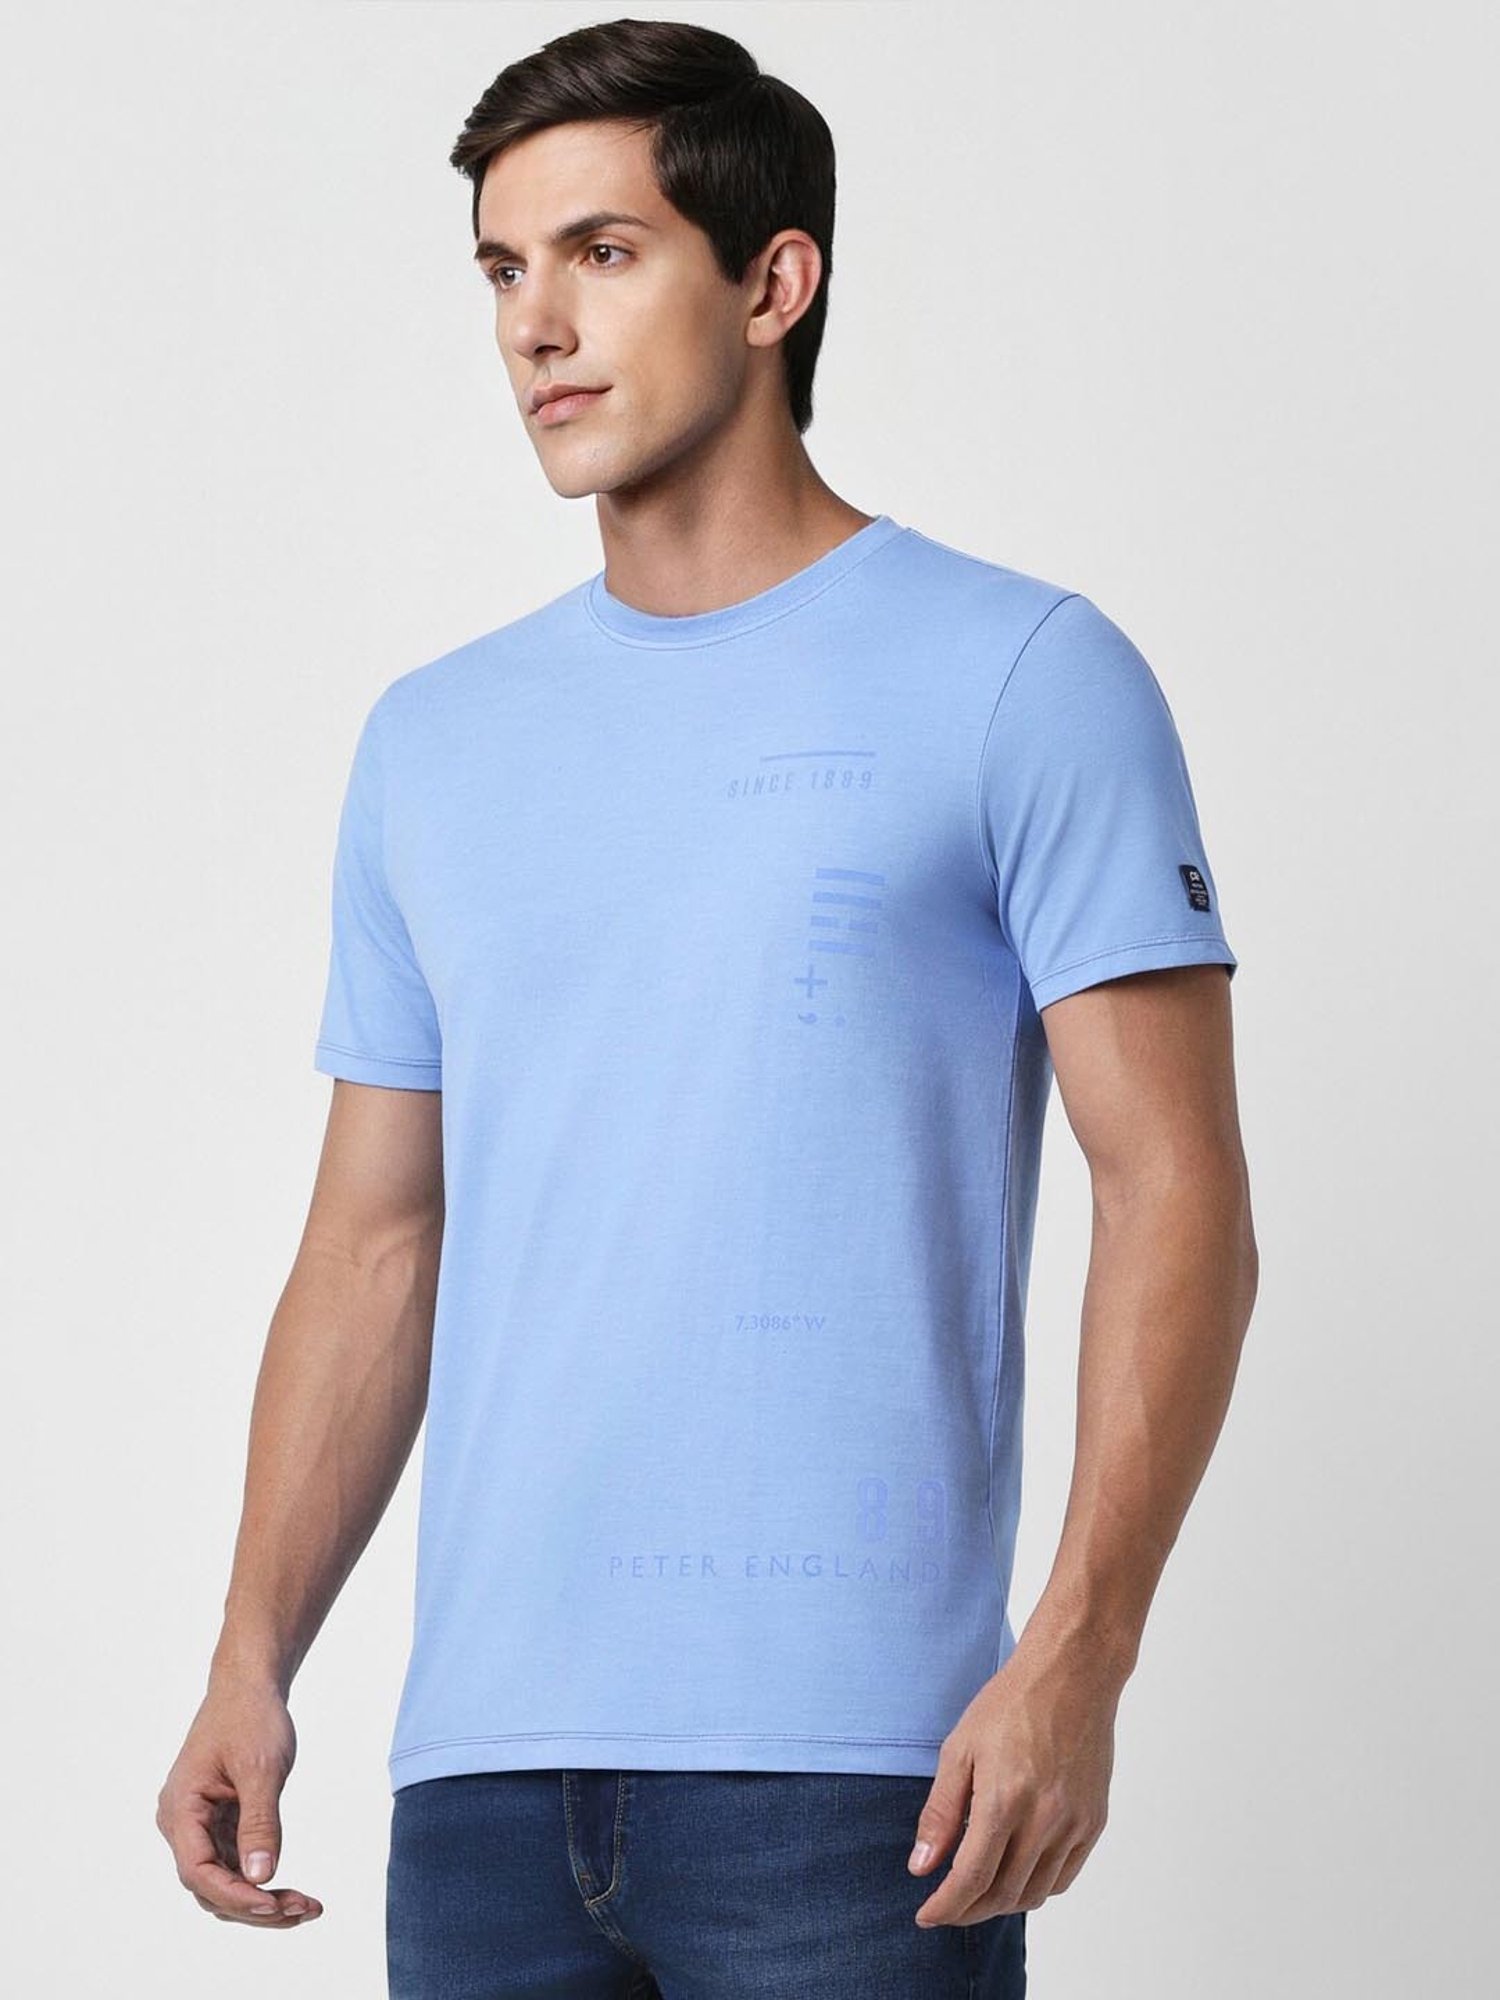 Buy Peter England Men's Slim Fit Shirt (PJSFPSSP891487_Blue at Amazon.in